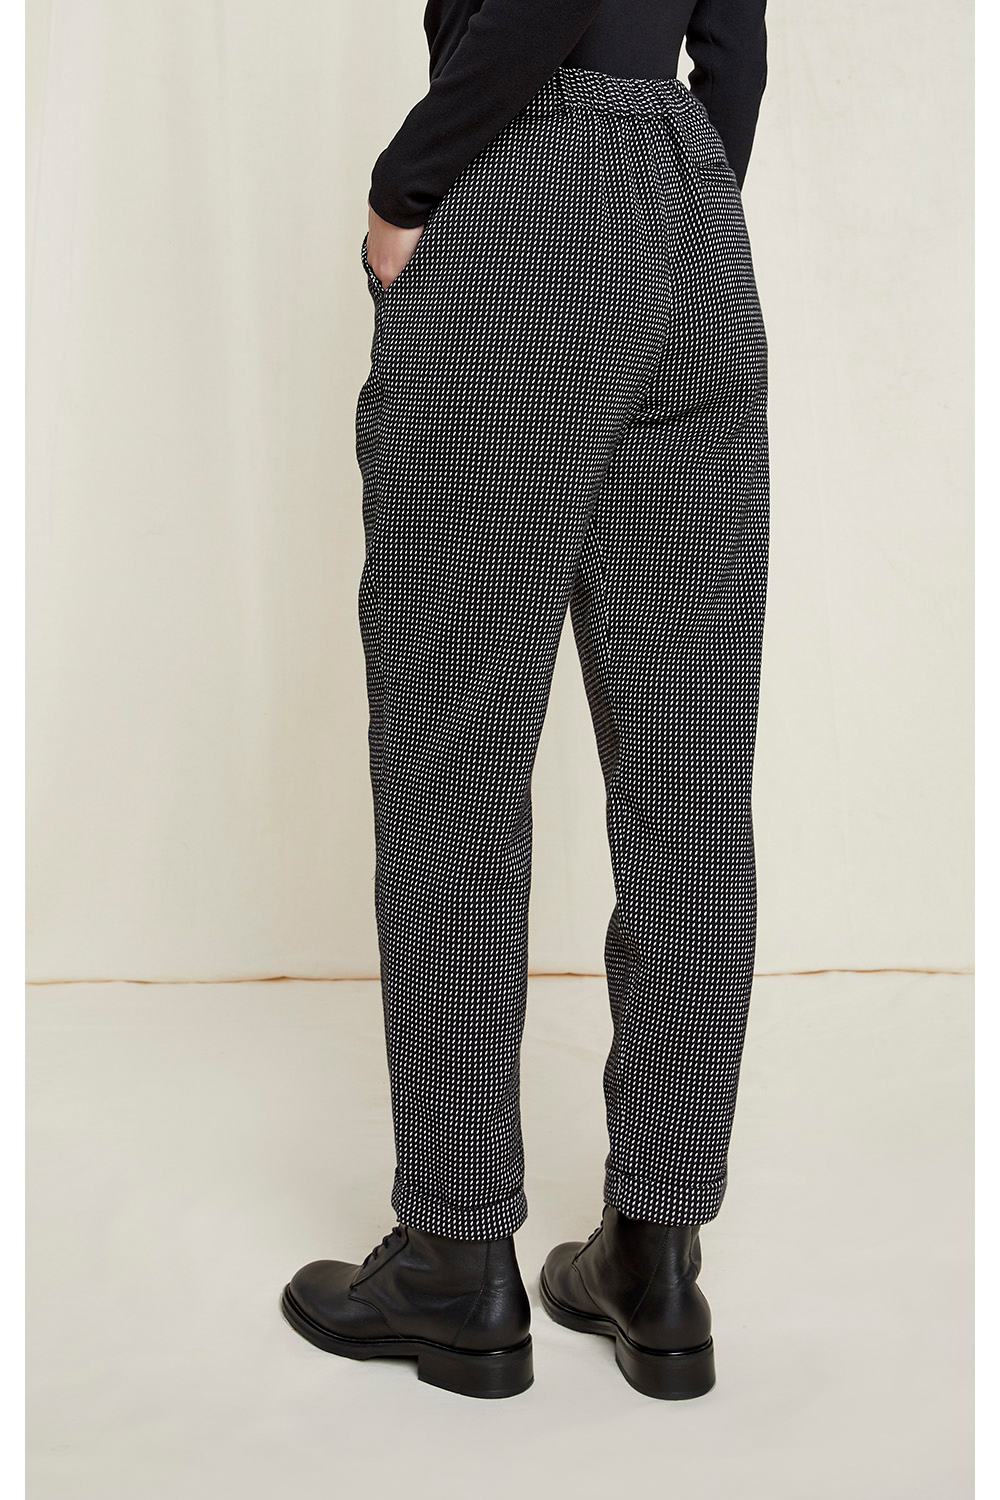 fionn-trousers-in-black-0930f0156005